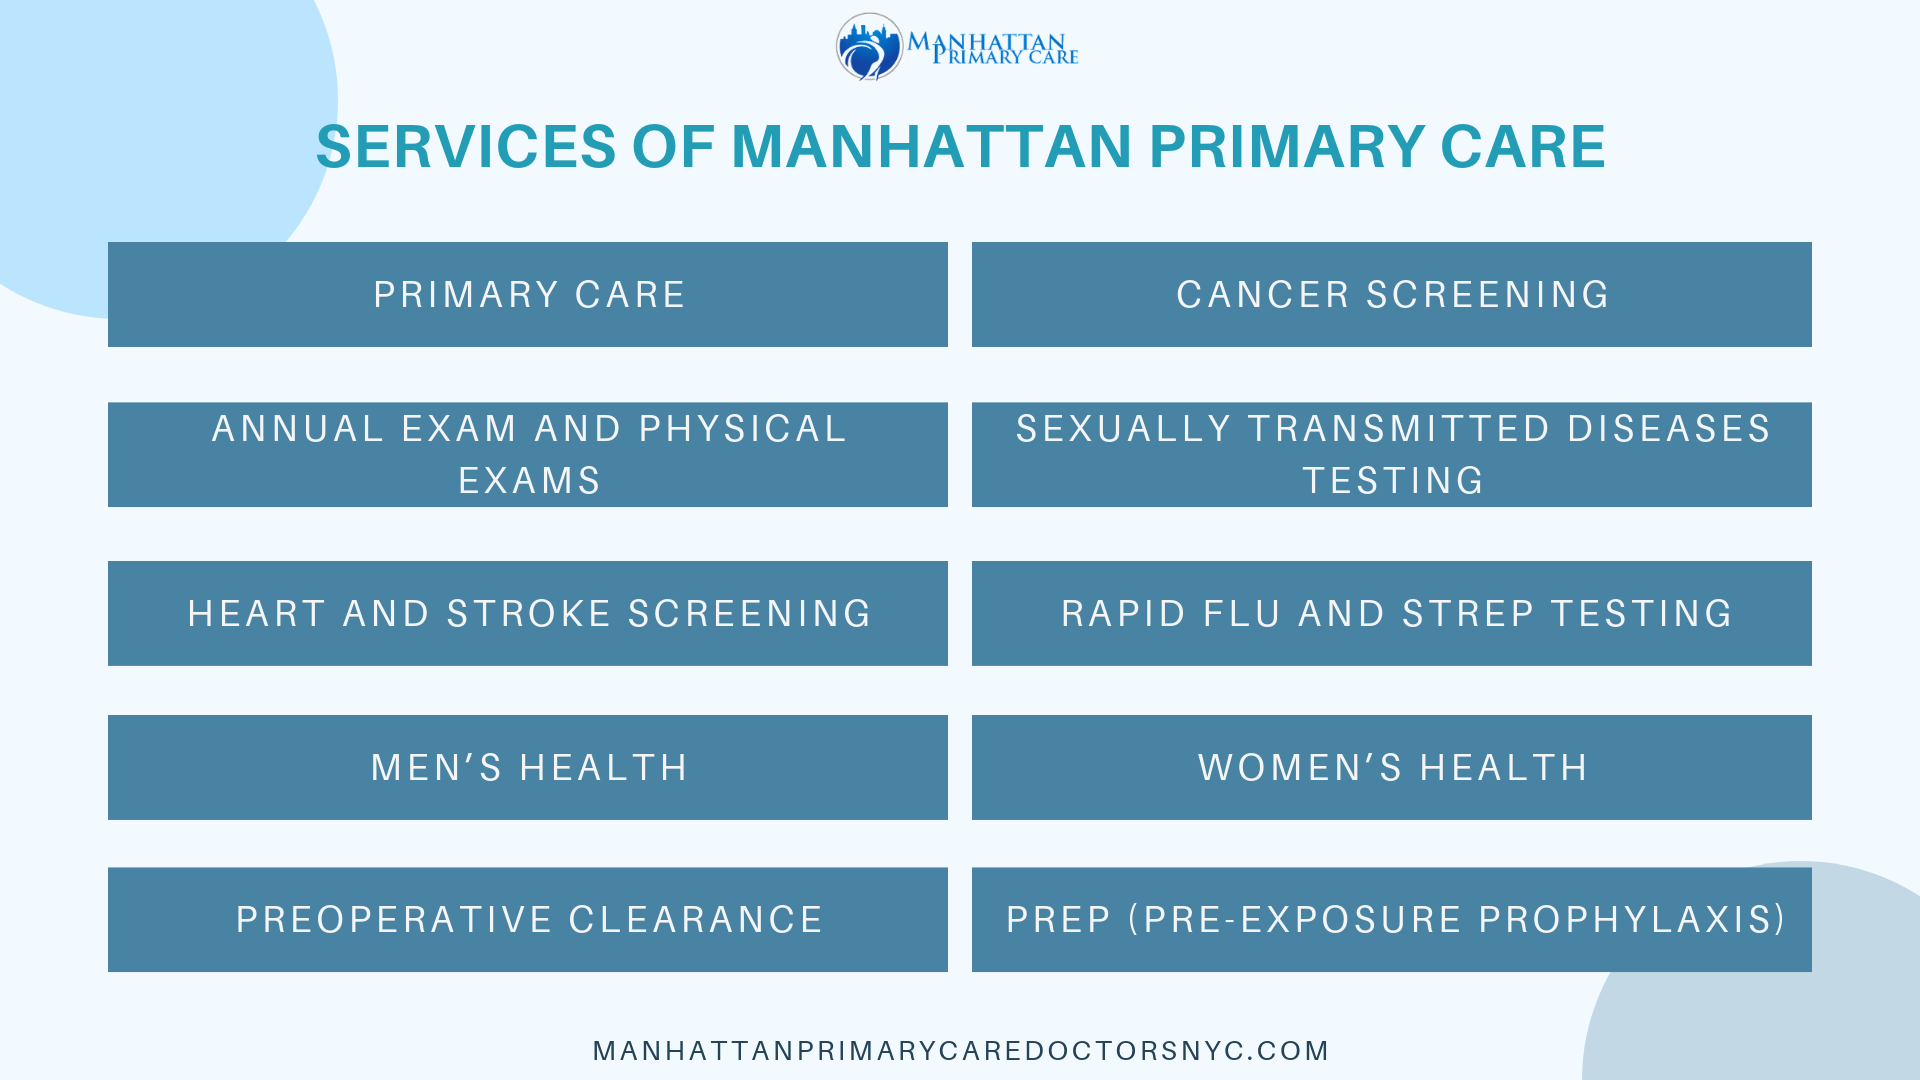 Services of Manhattan Primary Care'